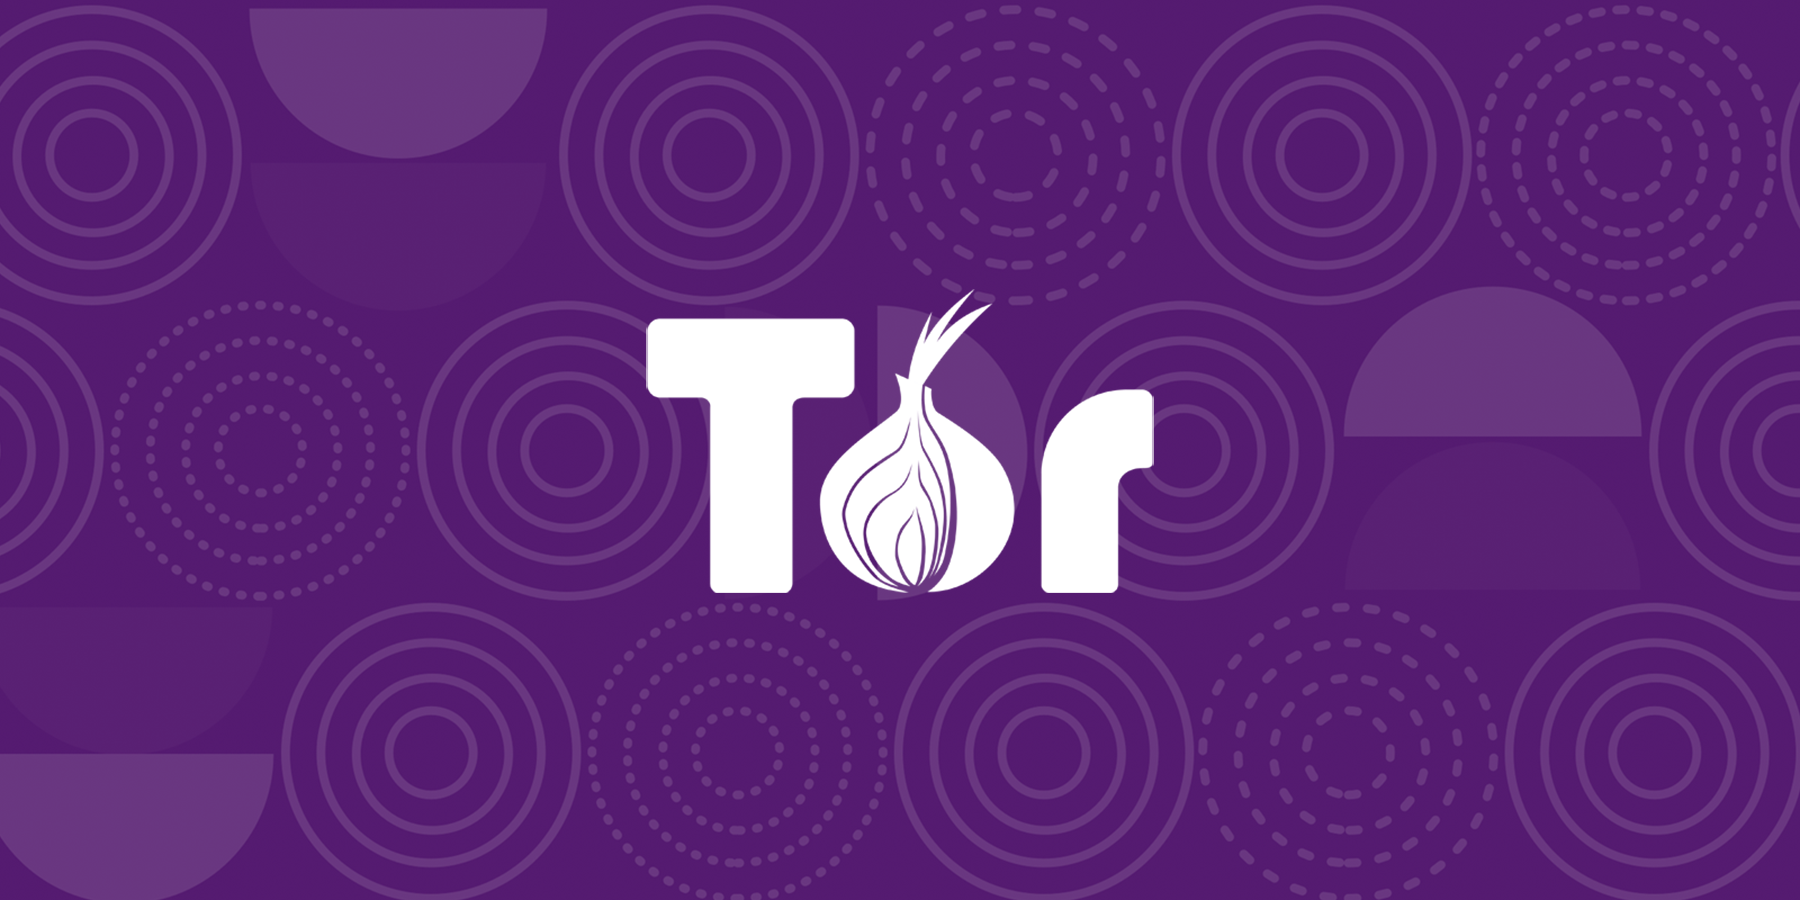 Tor onion browser mac вход на гидру новый браузер тор скачать бесплатно вход на гидру